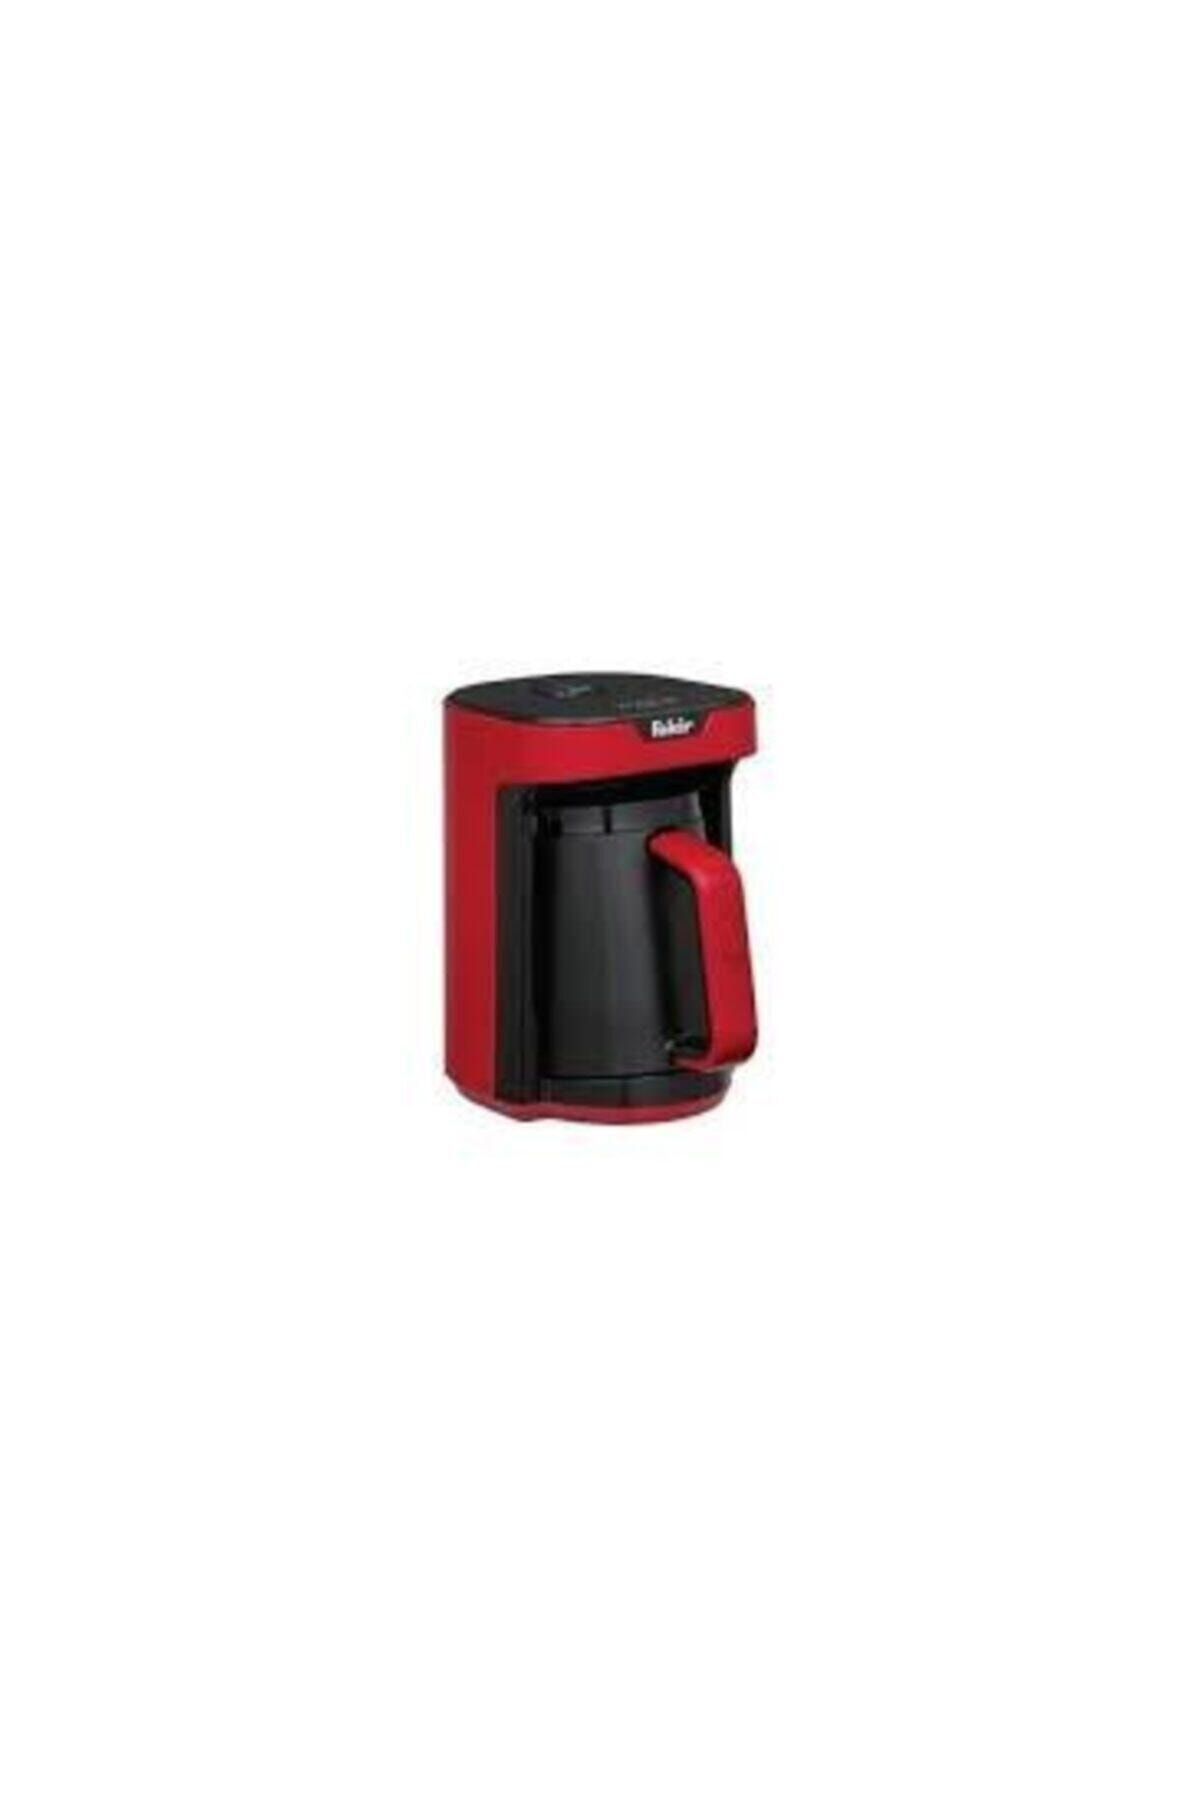 Fakir Kaave Expresstürk Kahvesi Makinesi Rouge Kırmızı